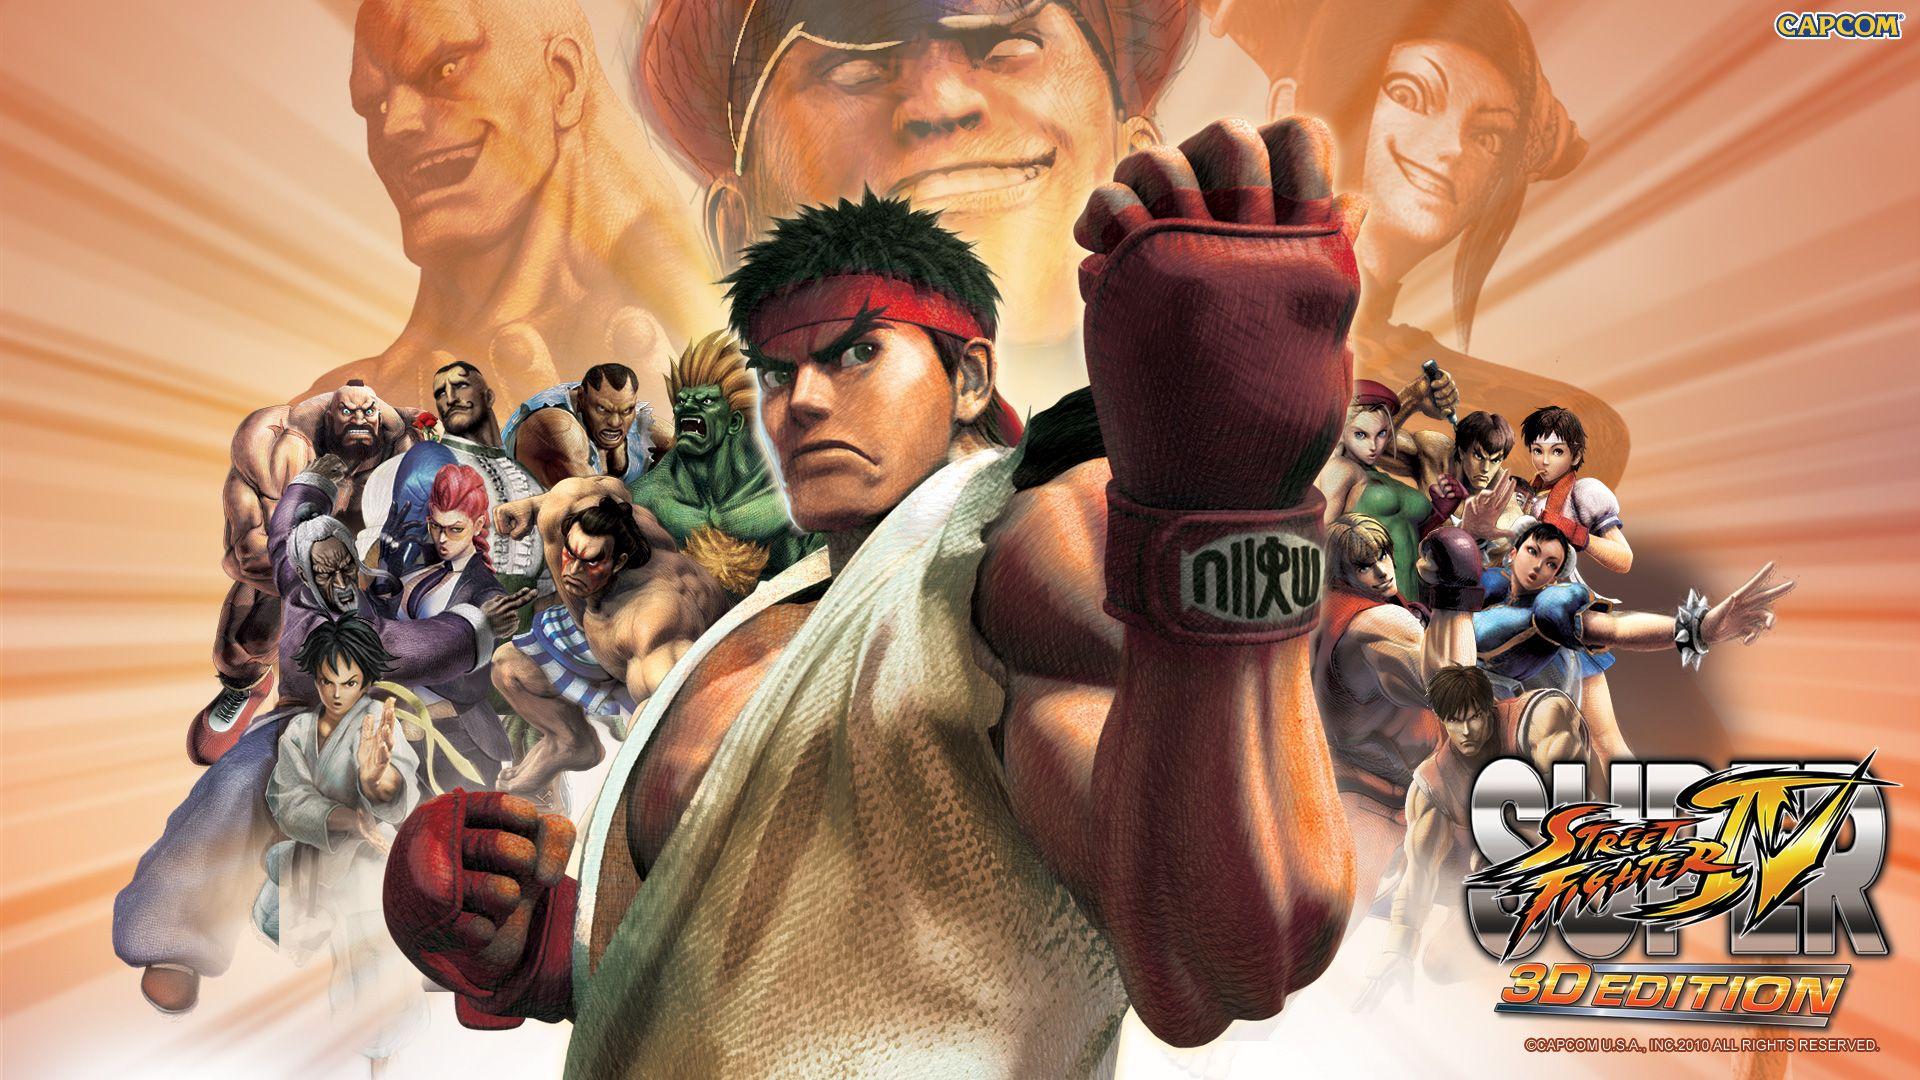 49+] Ultra Street Fighter 4 Wallpaper - WallpaperSafari